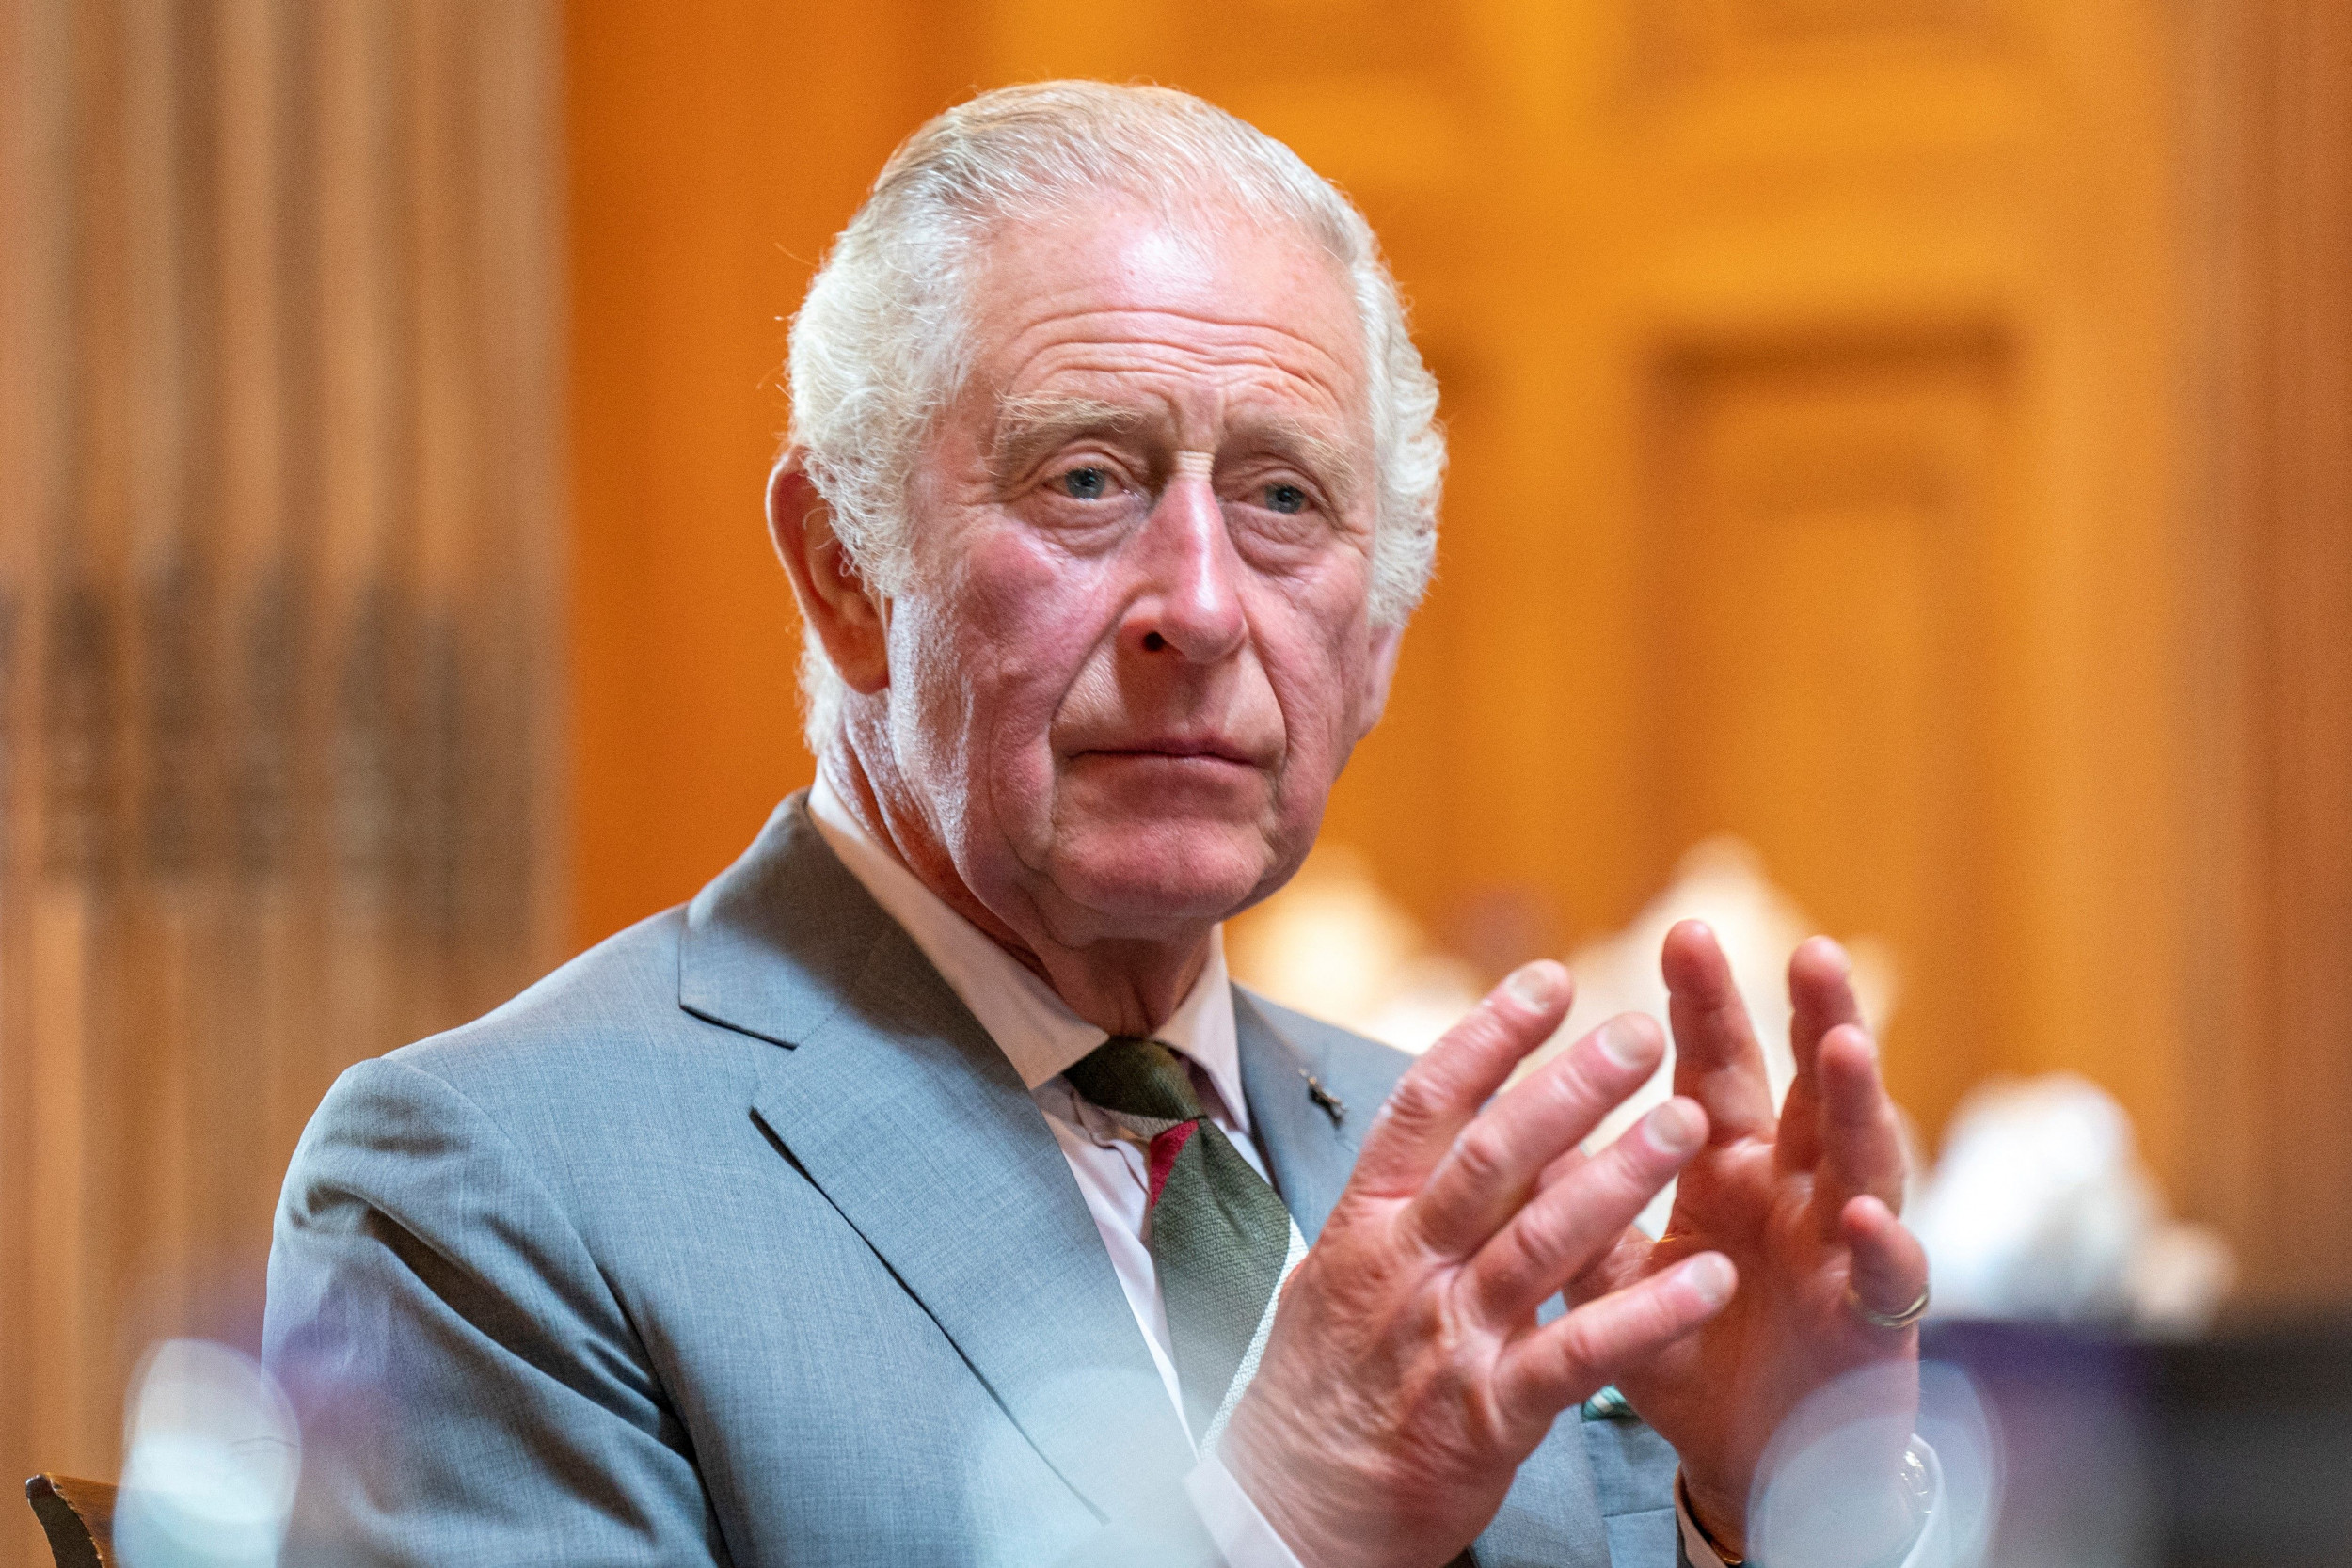 King Charles to undergo procedure on enlarged prostate, palace says - ABC  News